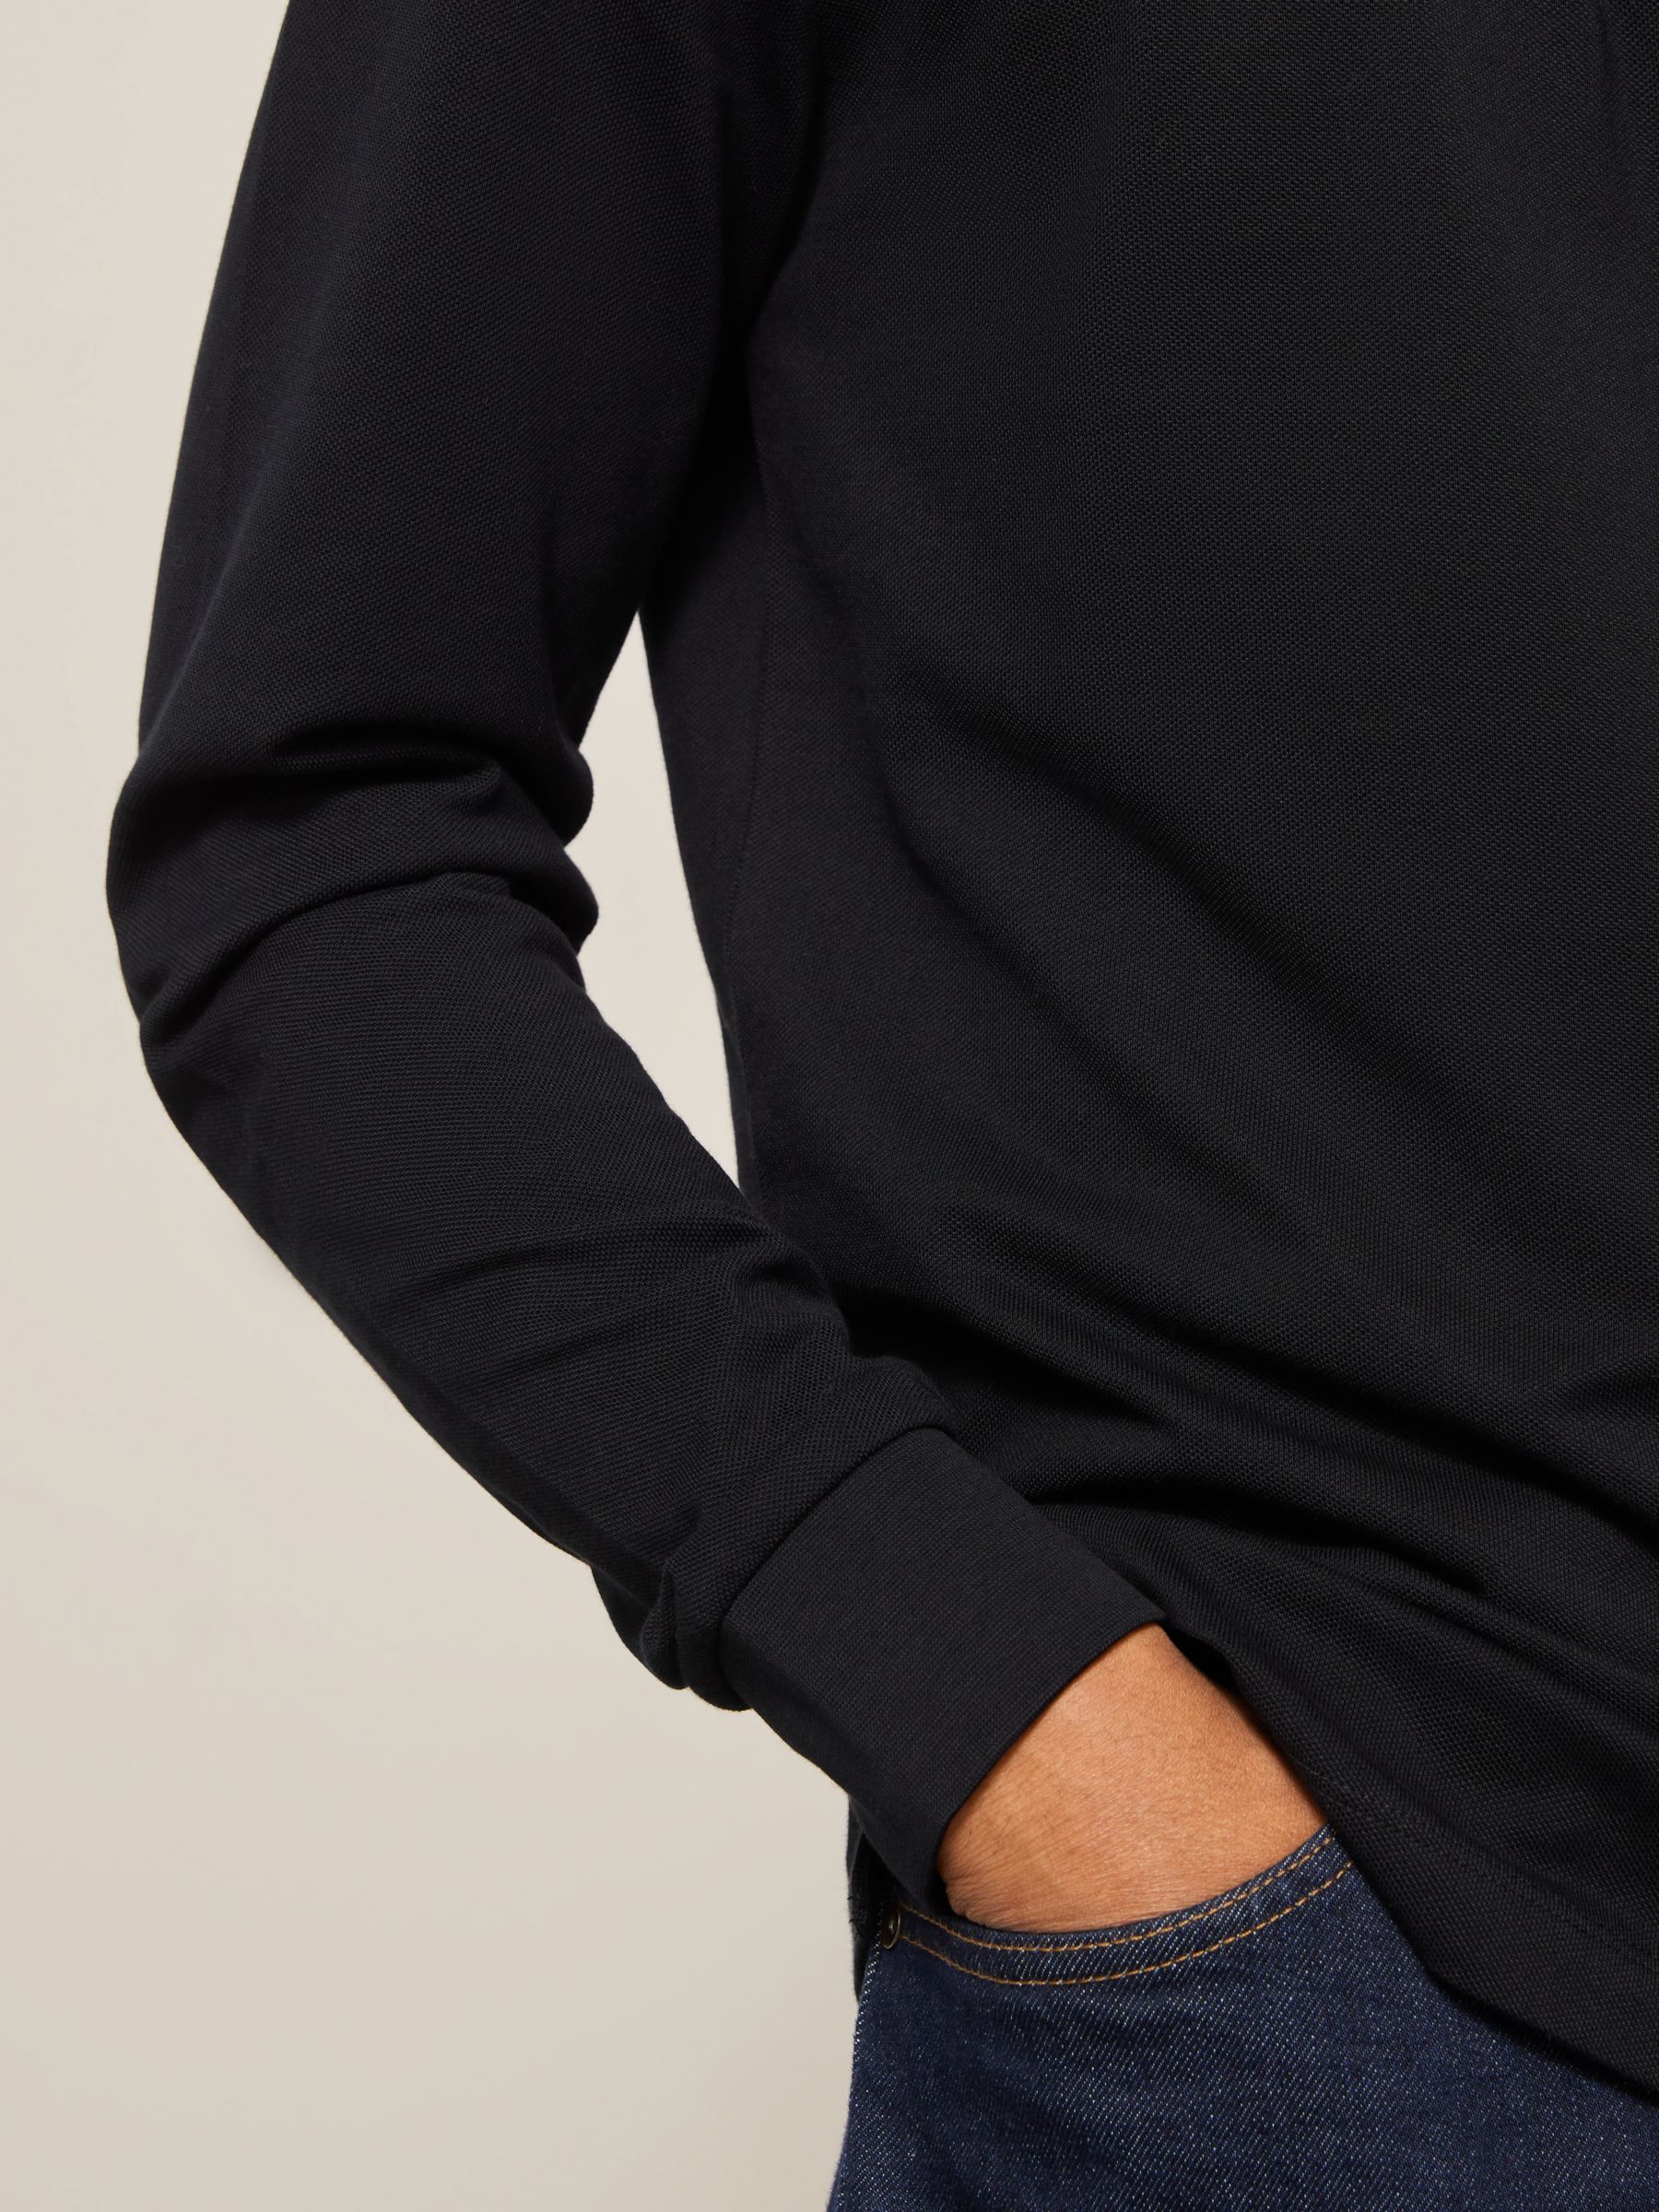 John Lewis Supima Cotton Long Sleeve Jersey Polo Shirt, Black, M